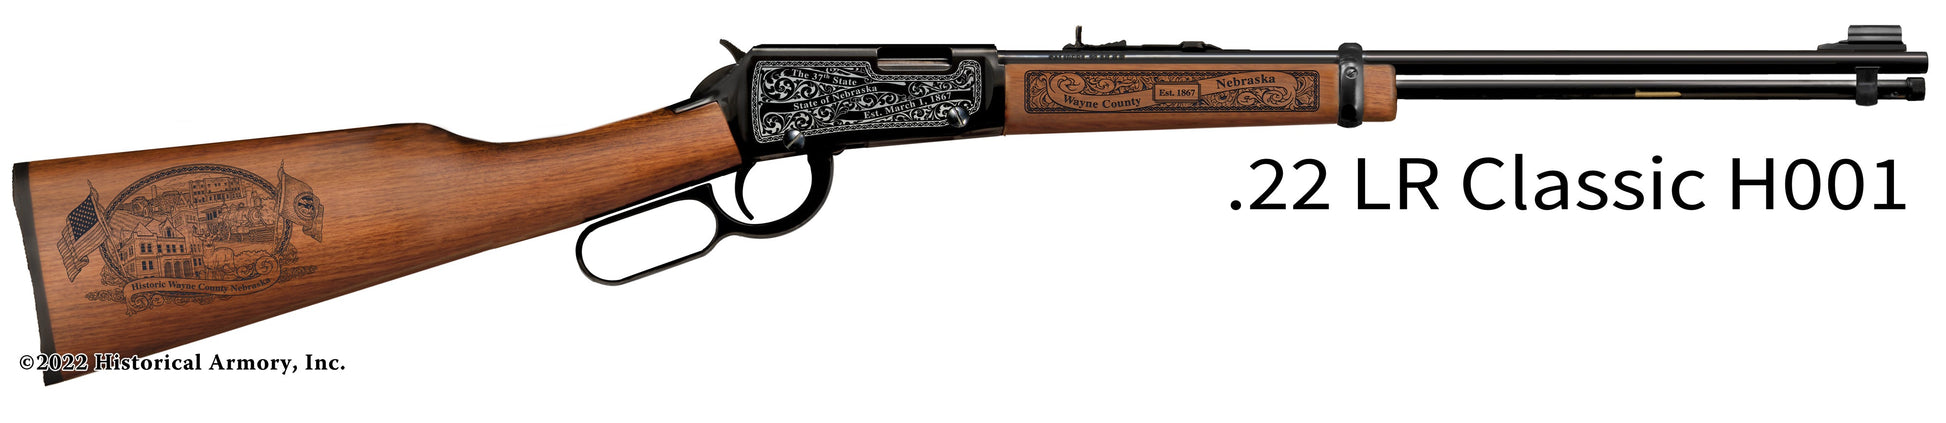 Wayne County Nebraska Engraved Henry H001 Rifle